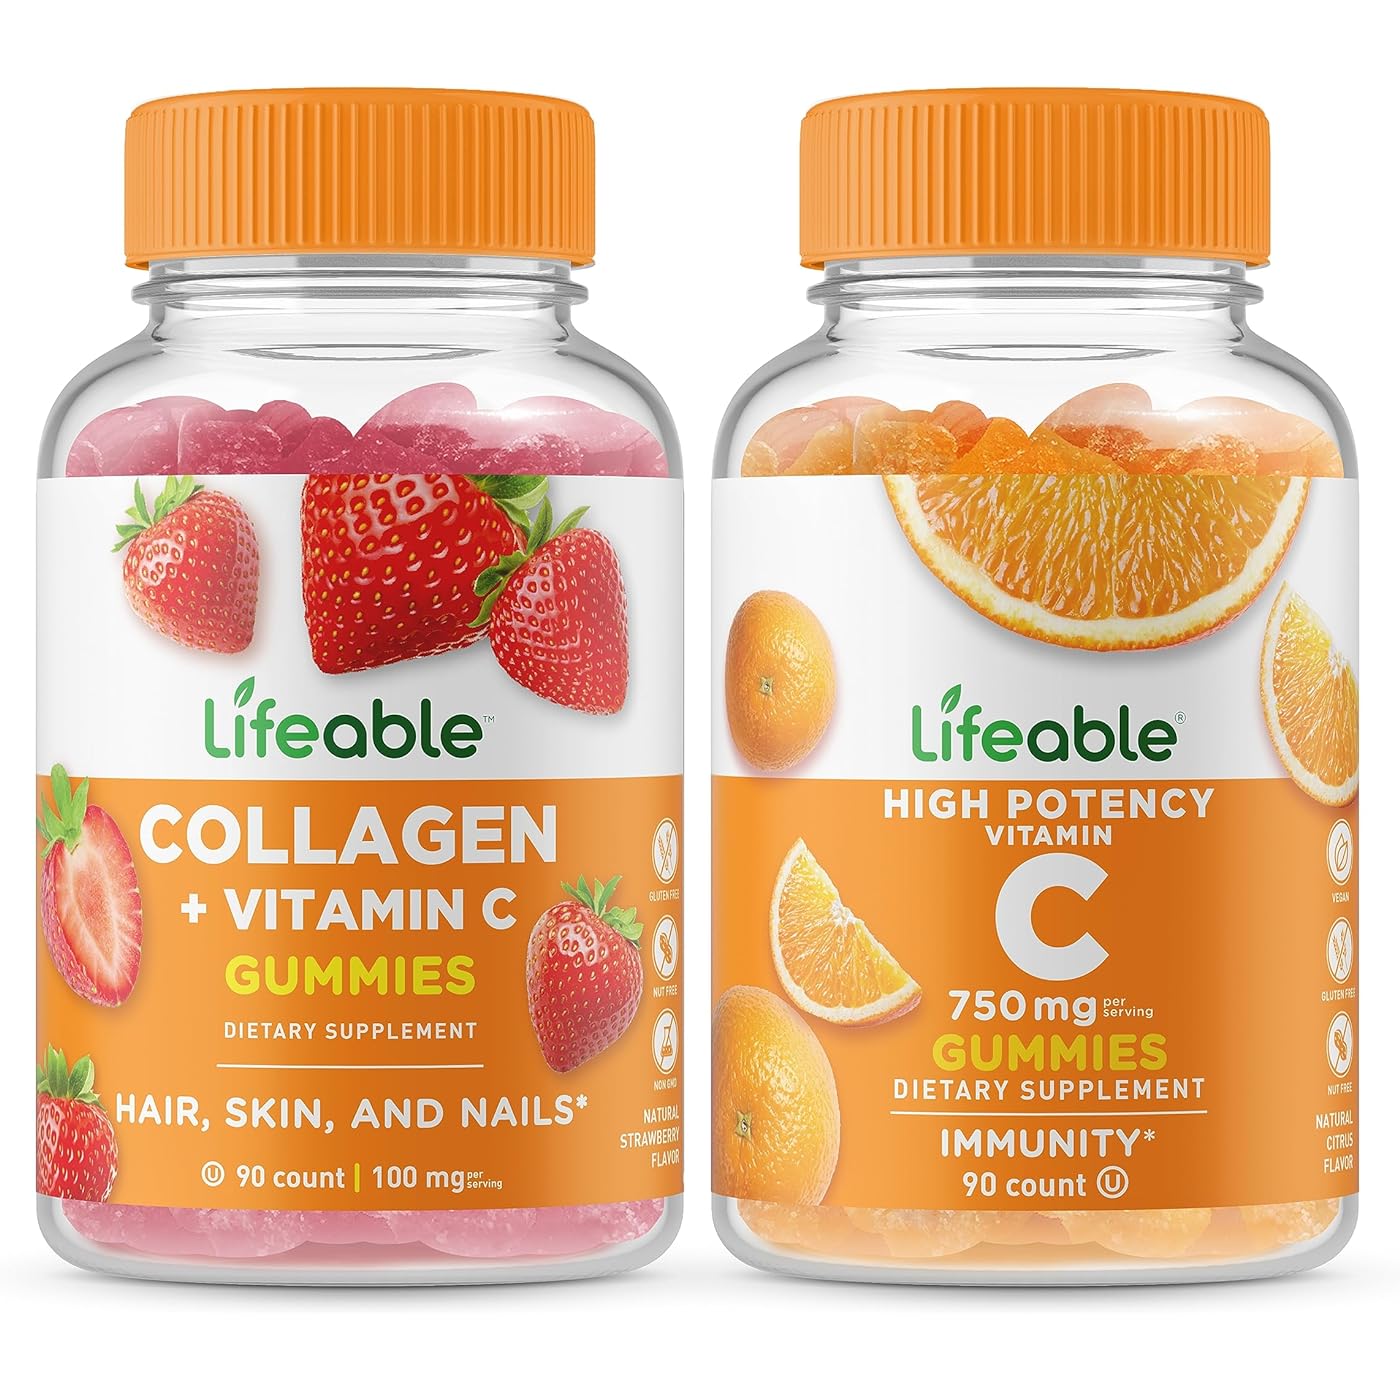 Набор витаминов Lifeable Collagen + Vitamin C & Vitamin C 750 mg, 2 предмета, 90 таблеток набор витаминов lifeable vitamin c 1050 mg